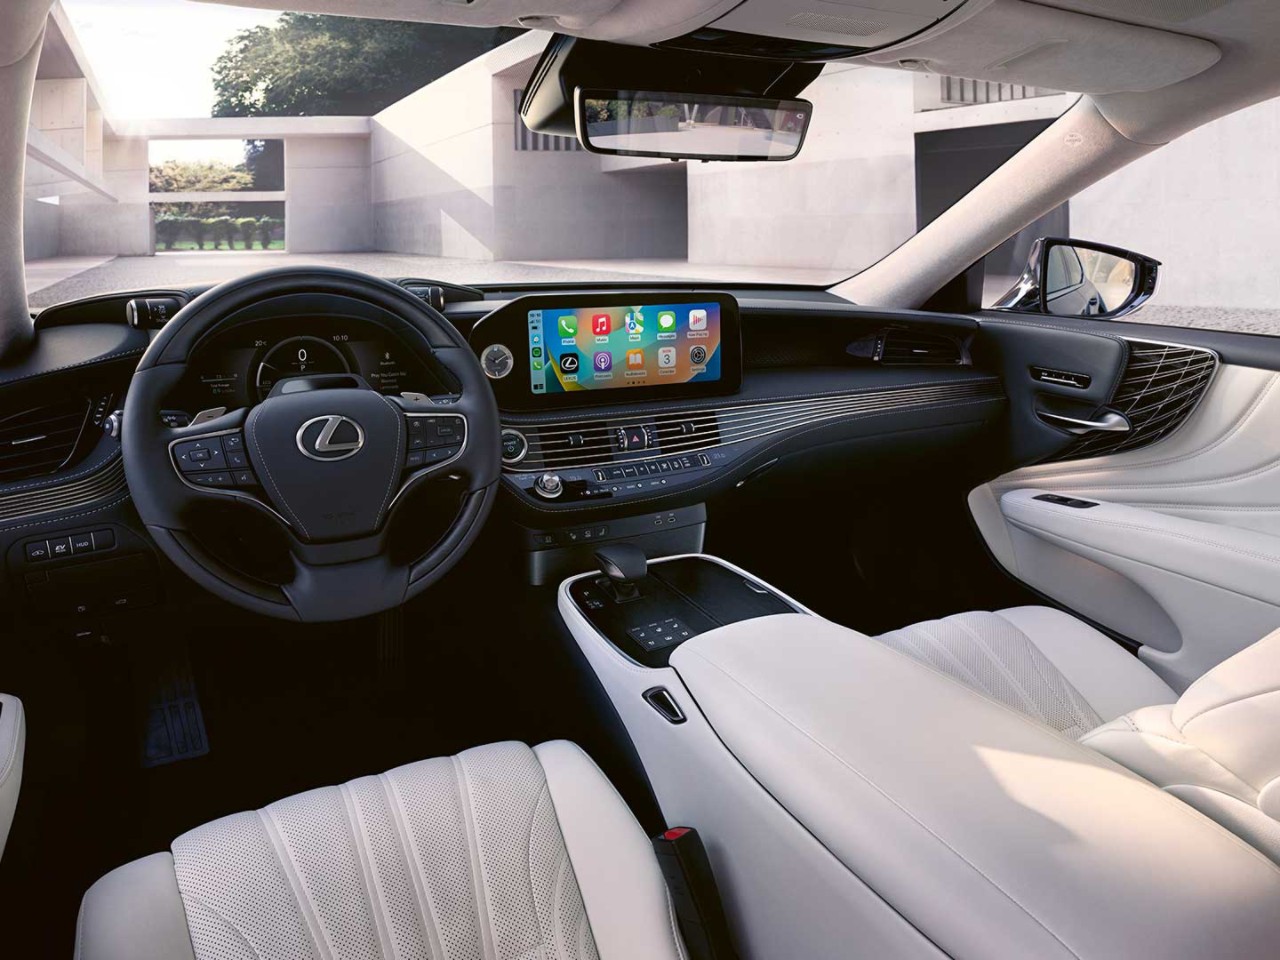 The interior view of the Lexus LS